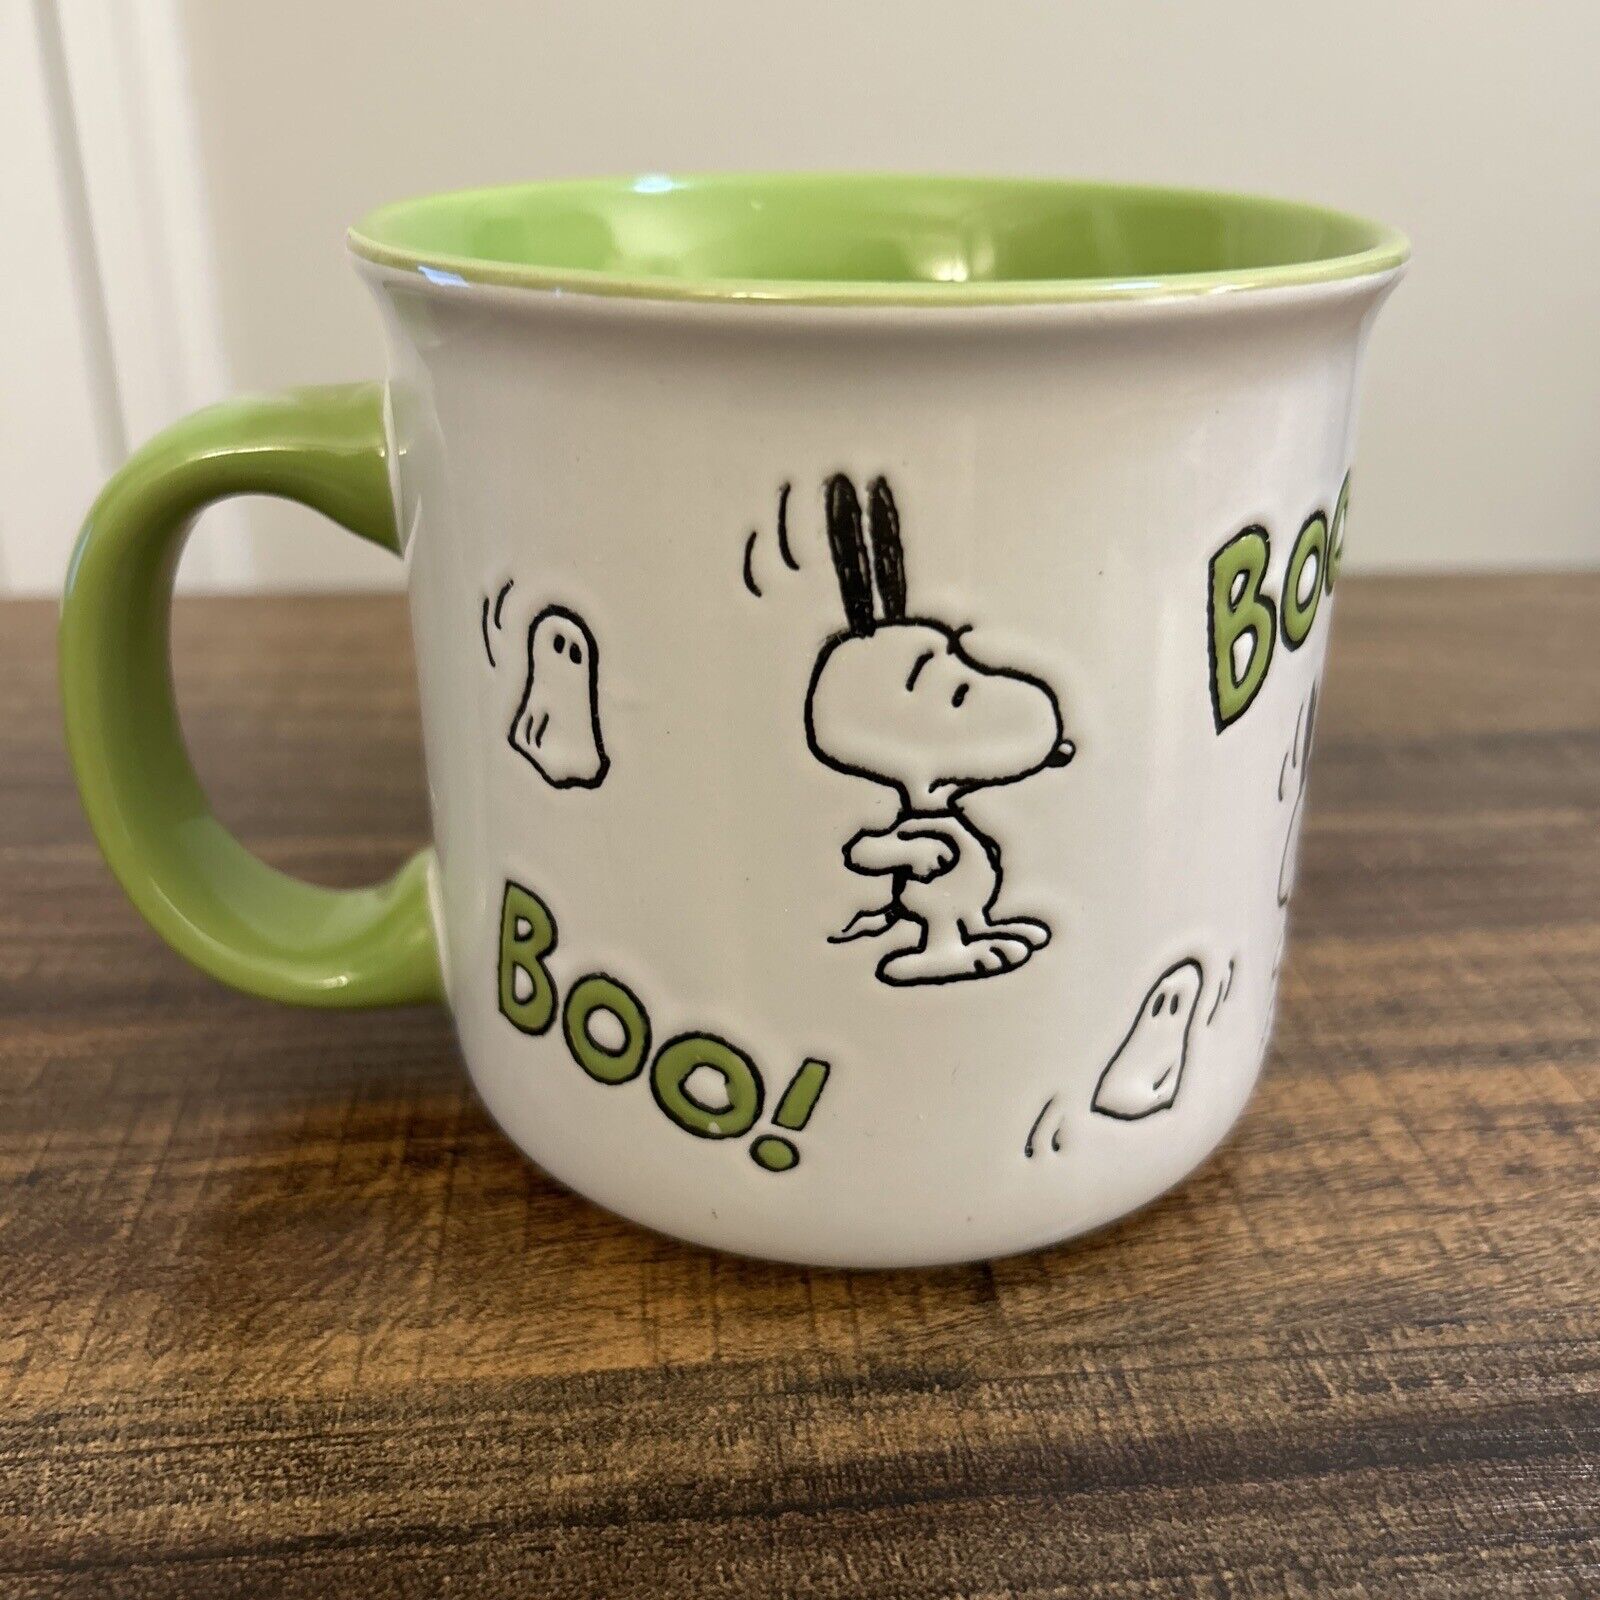 Gibson Homeware Peanuts Snoopy Boo Ghost Coffee/Tea Cup